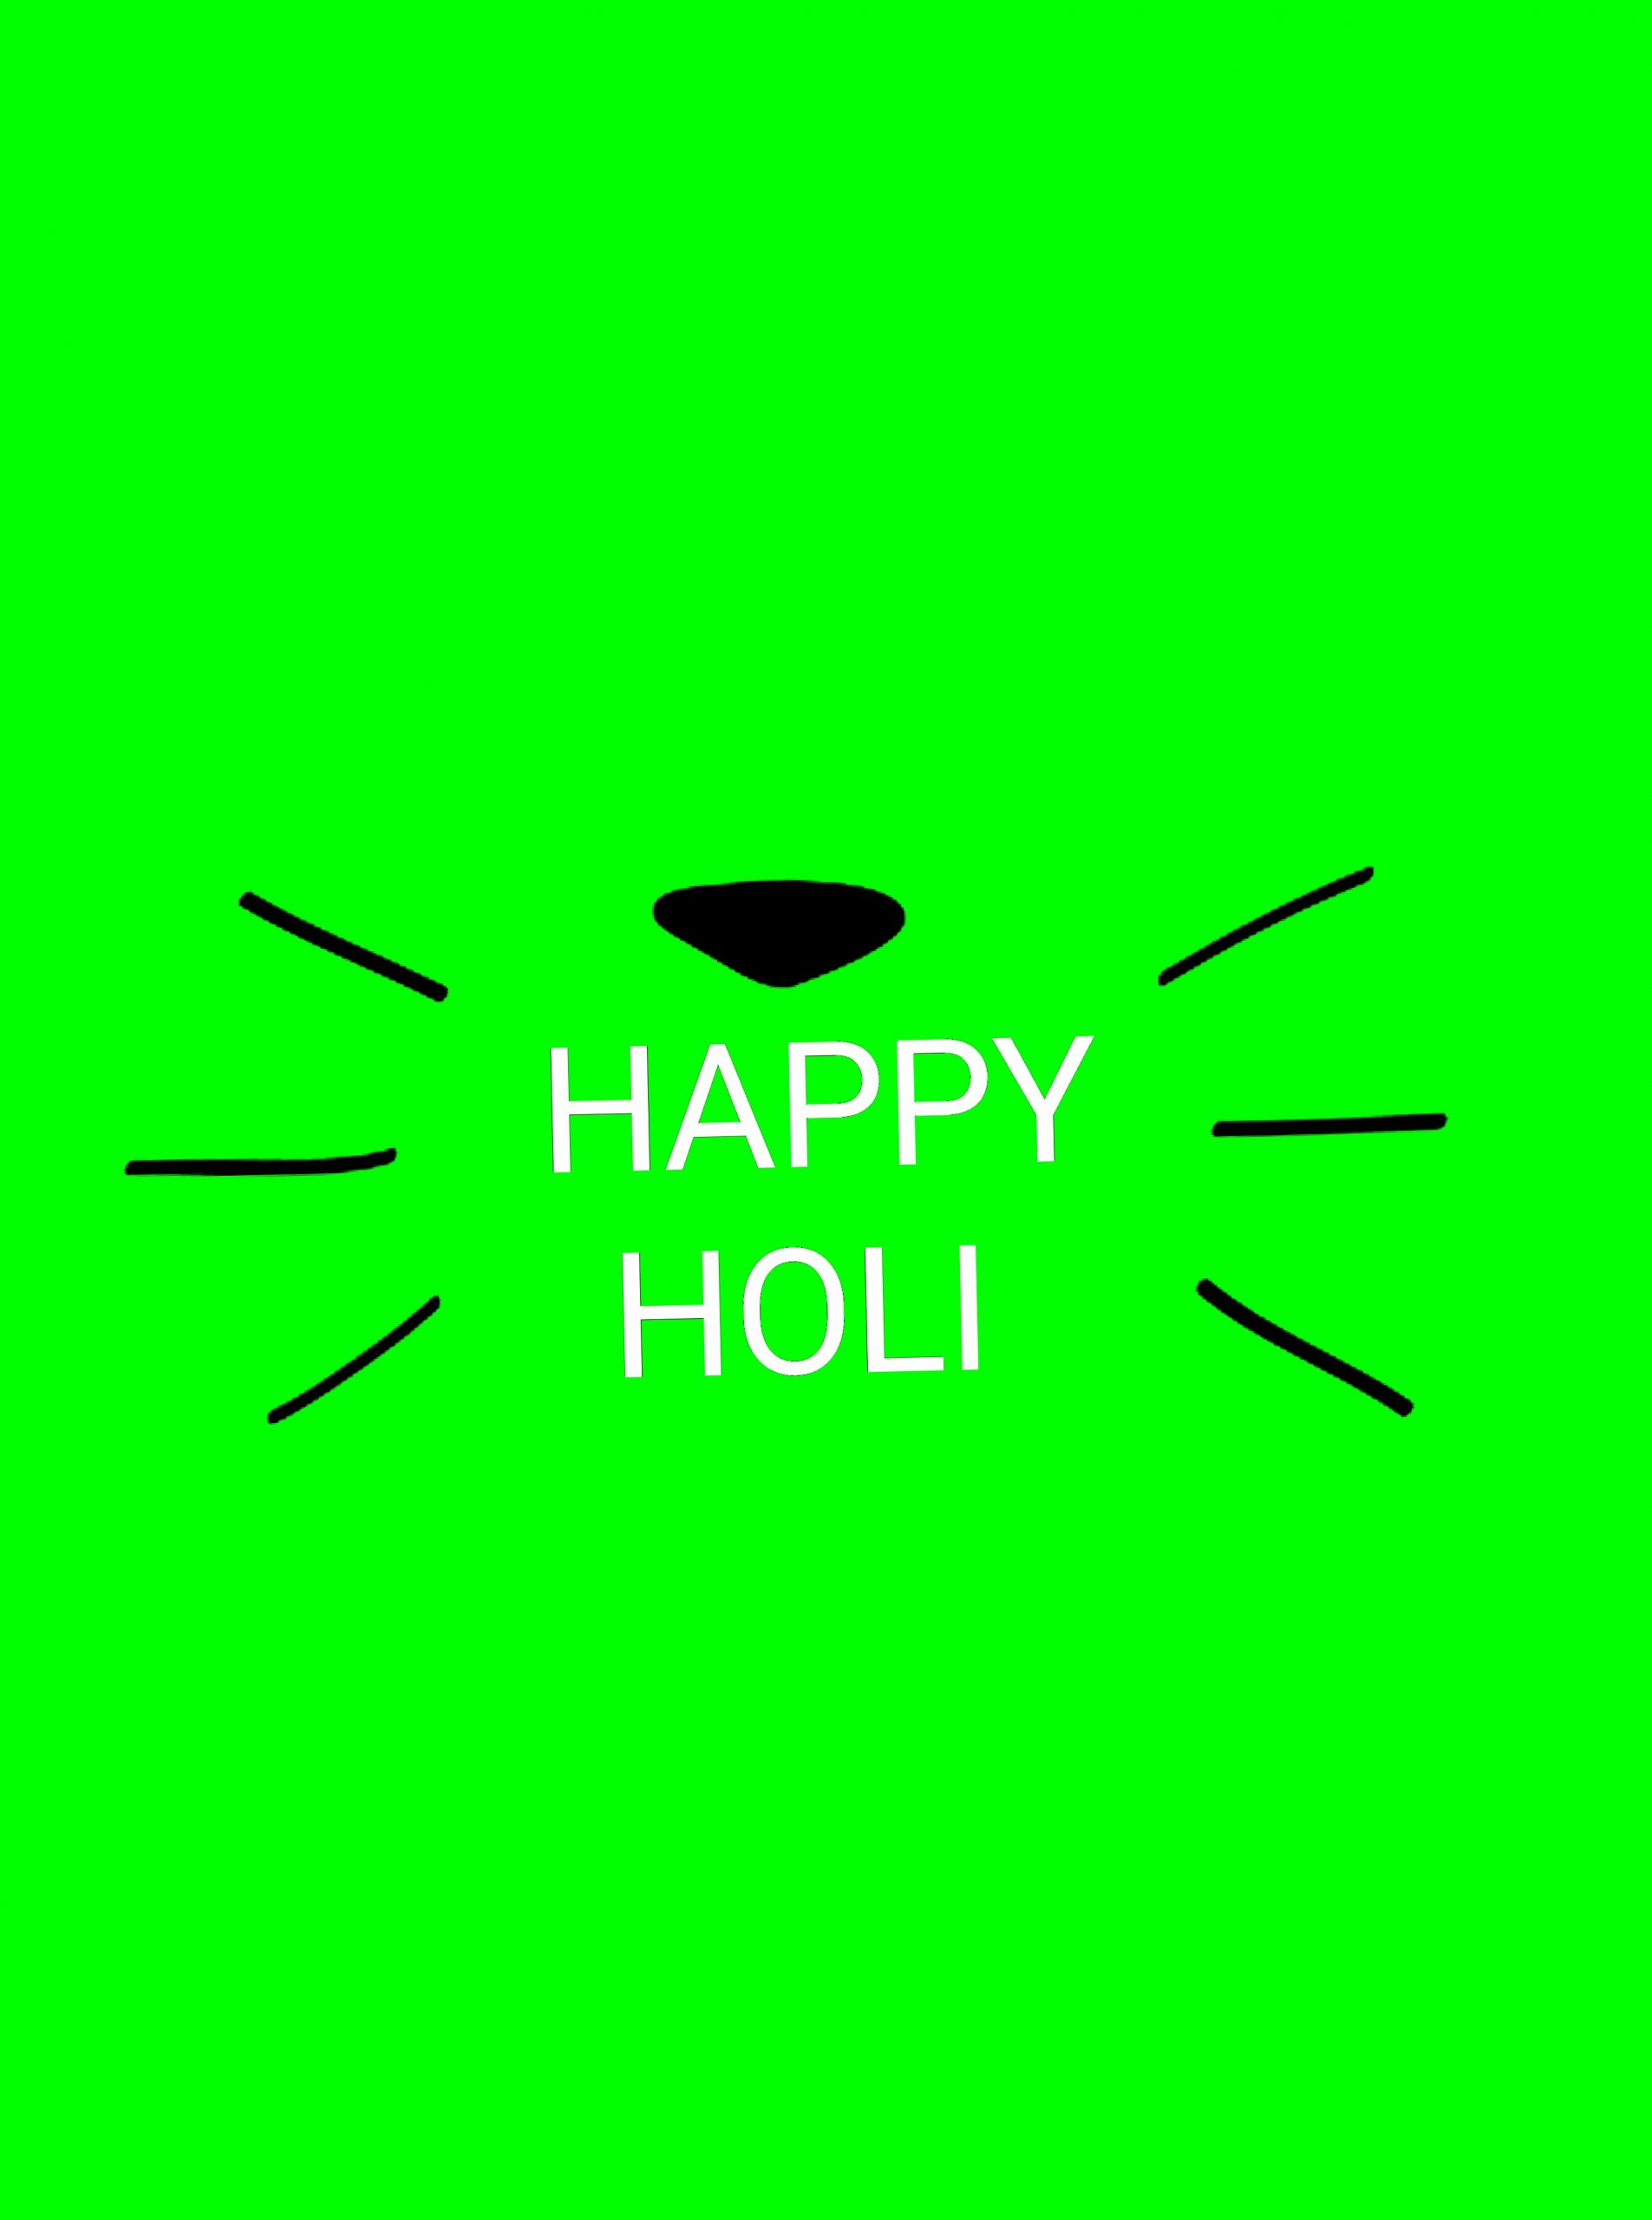 Holi wishes